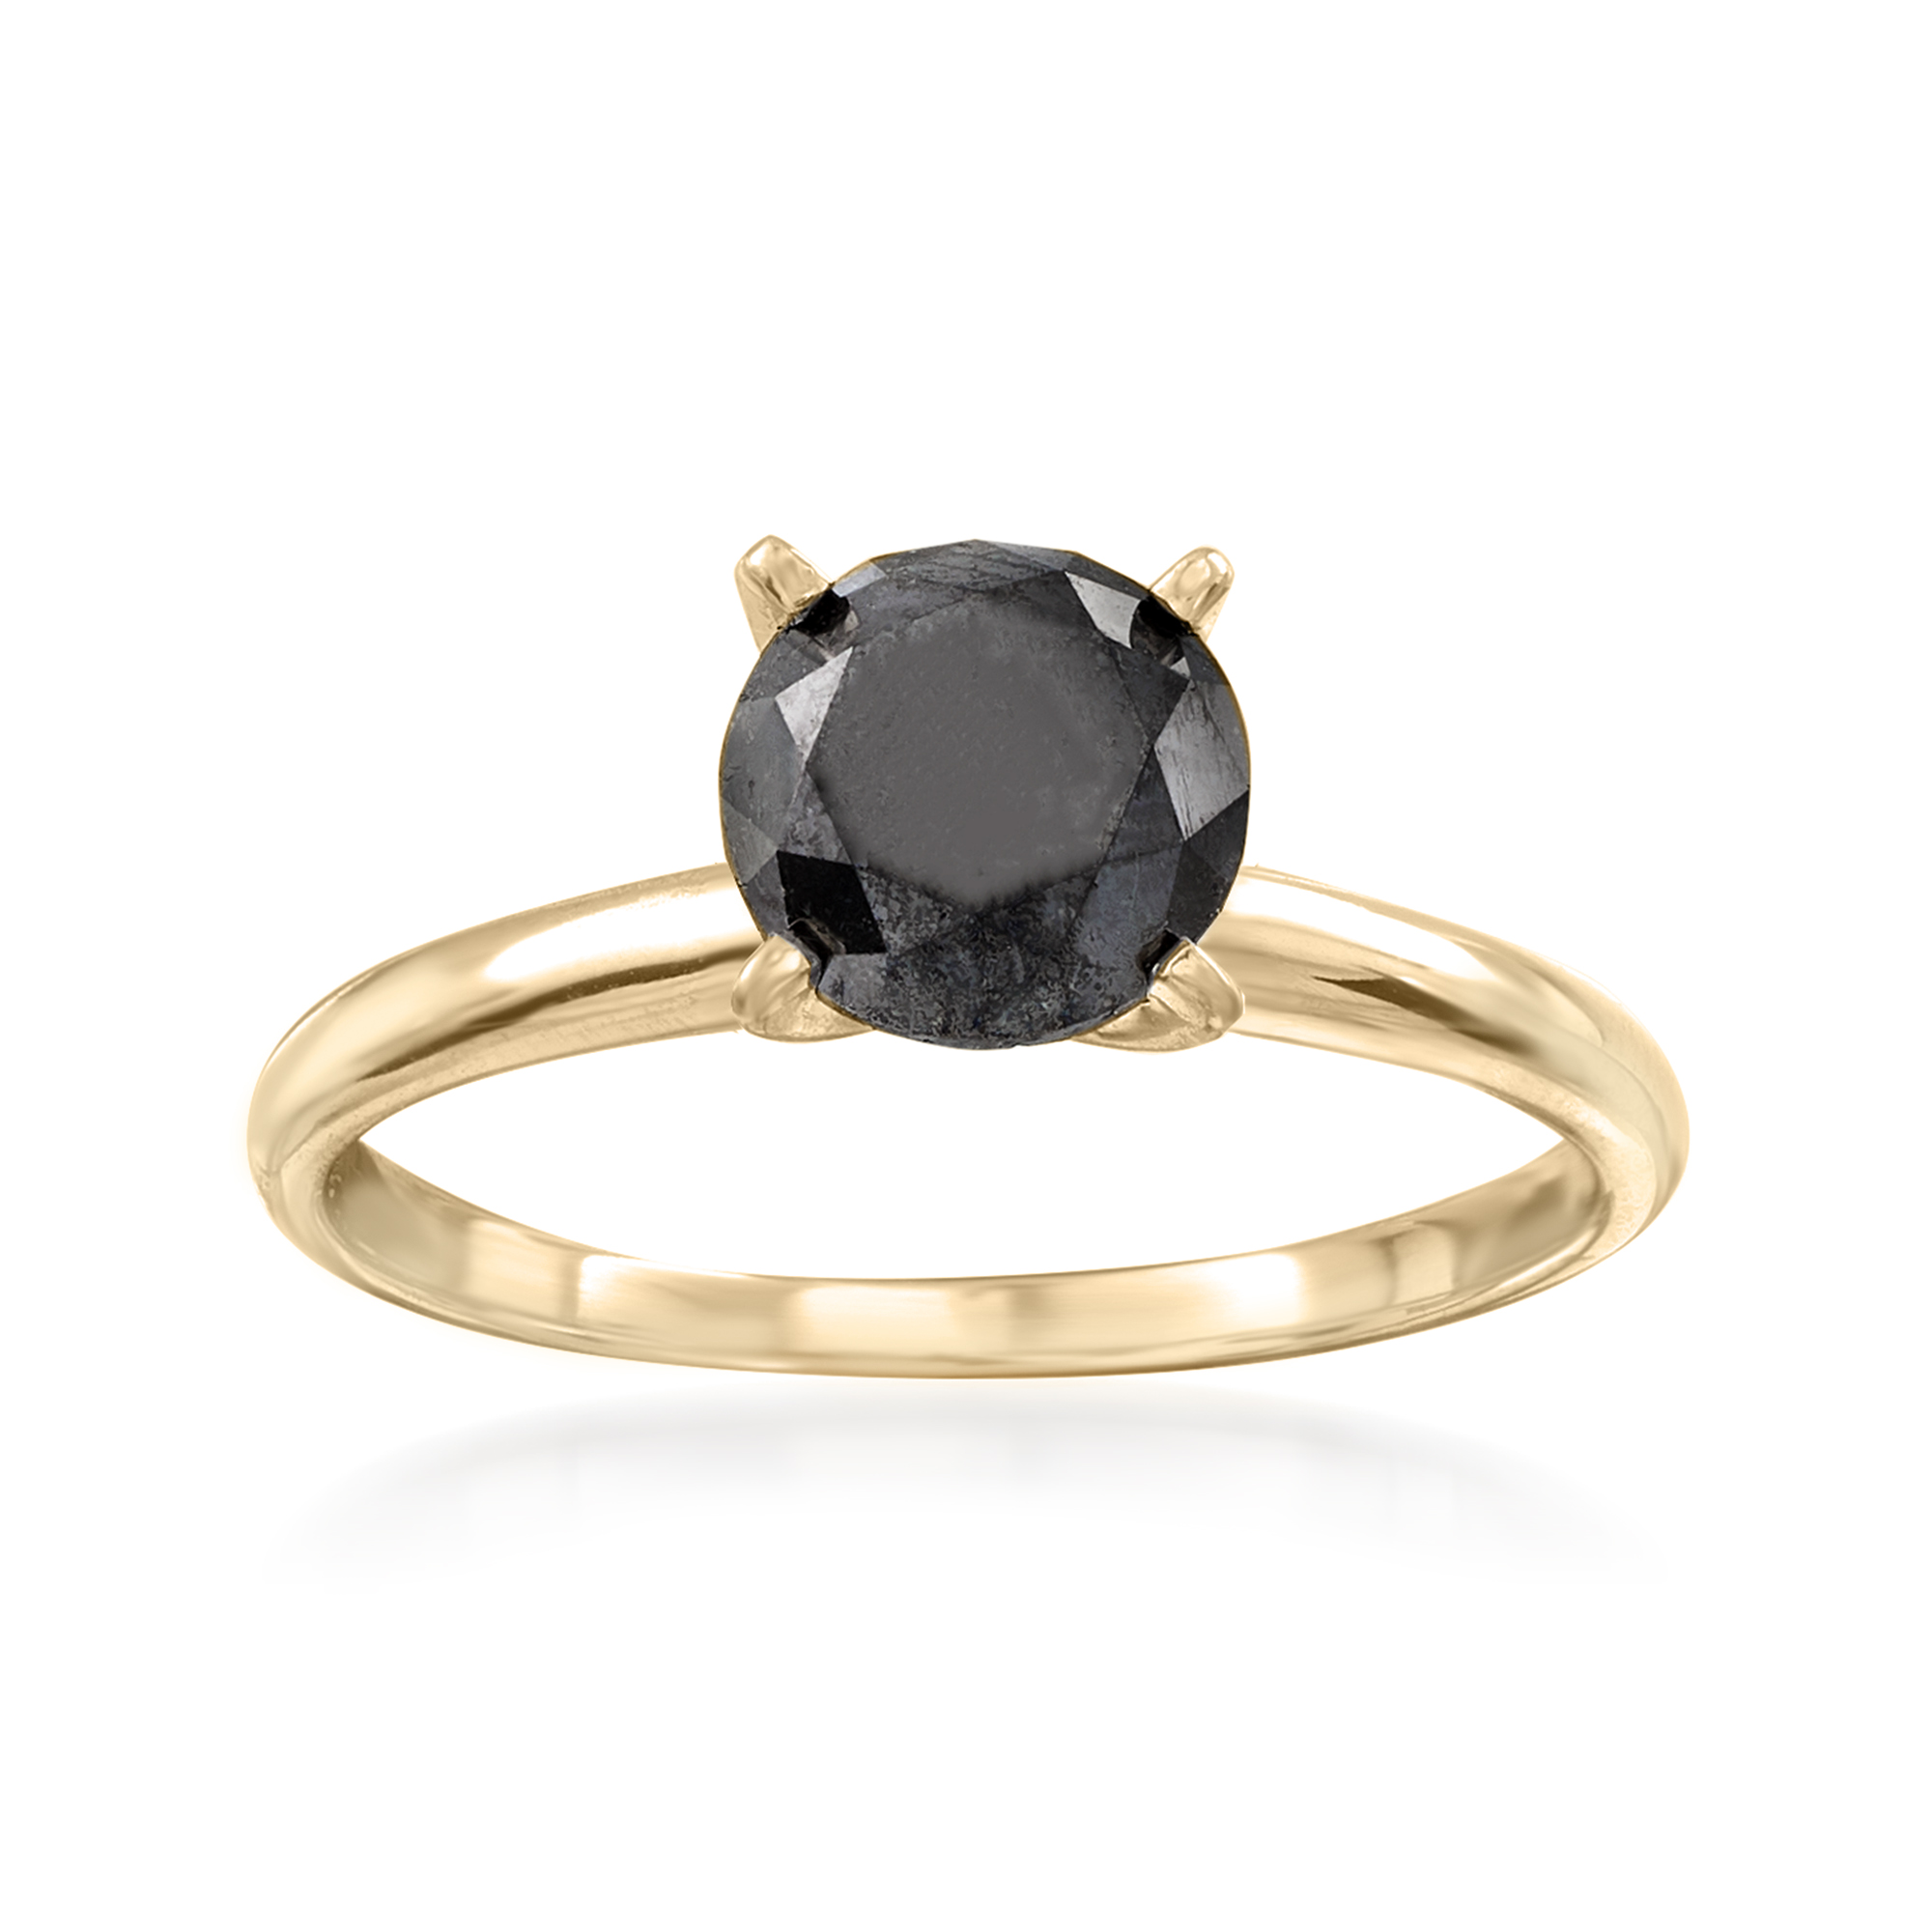 Ross-Simons 1.00 Carat Black Diamond Solitaire Ring in 14kt Yellow Gold |  eBay